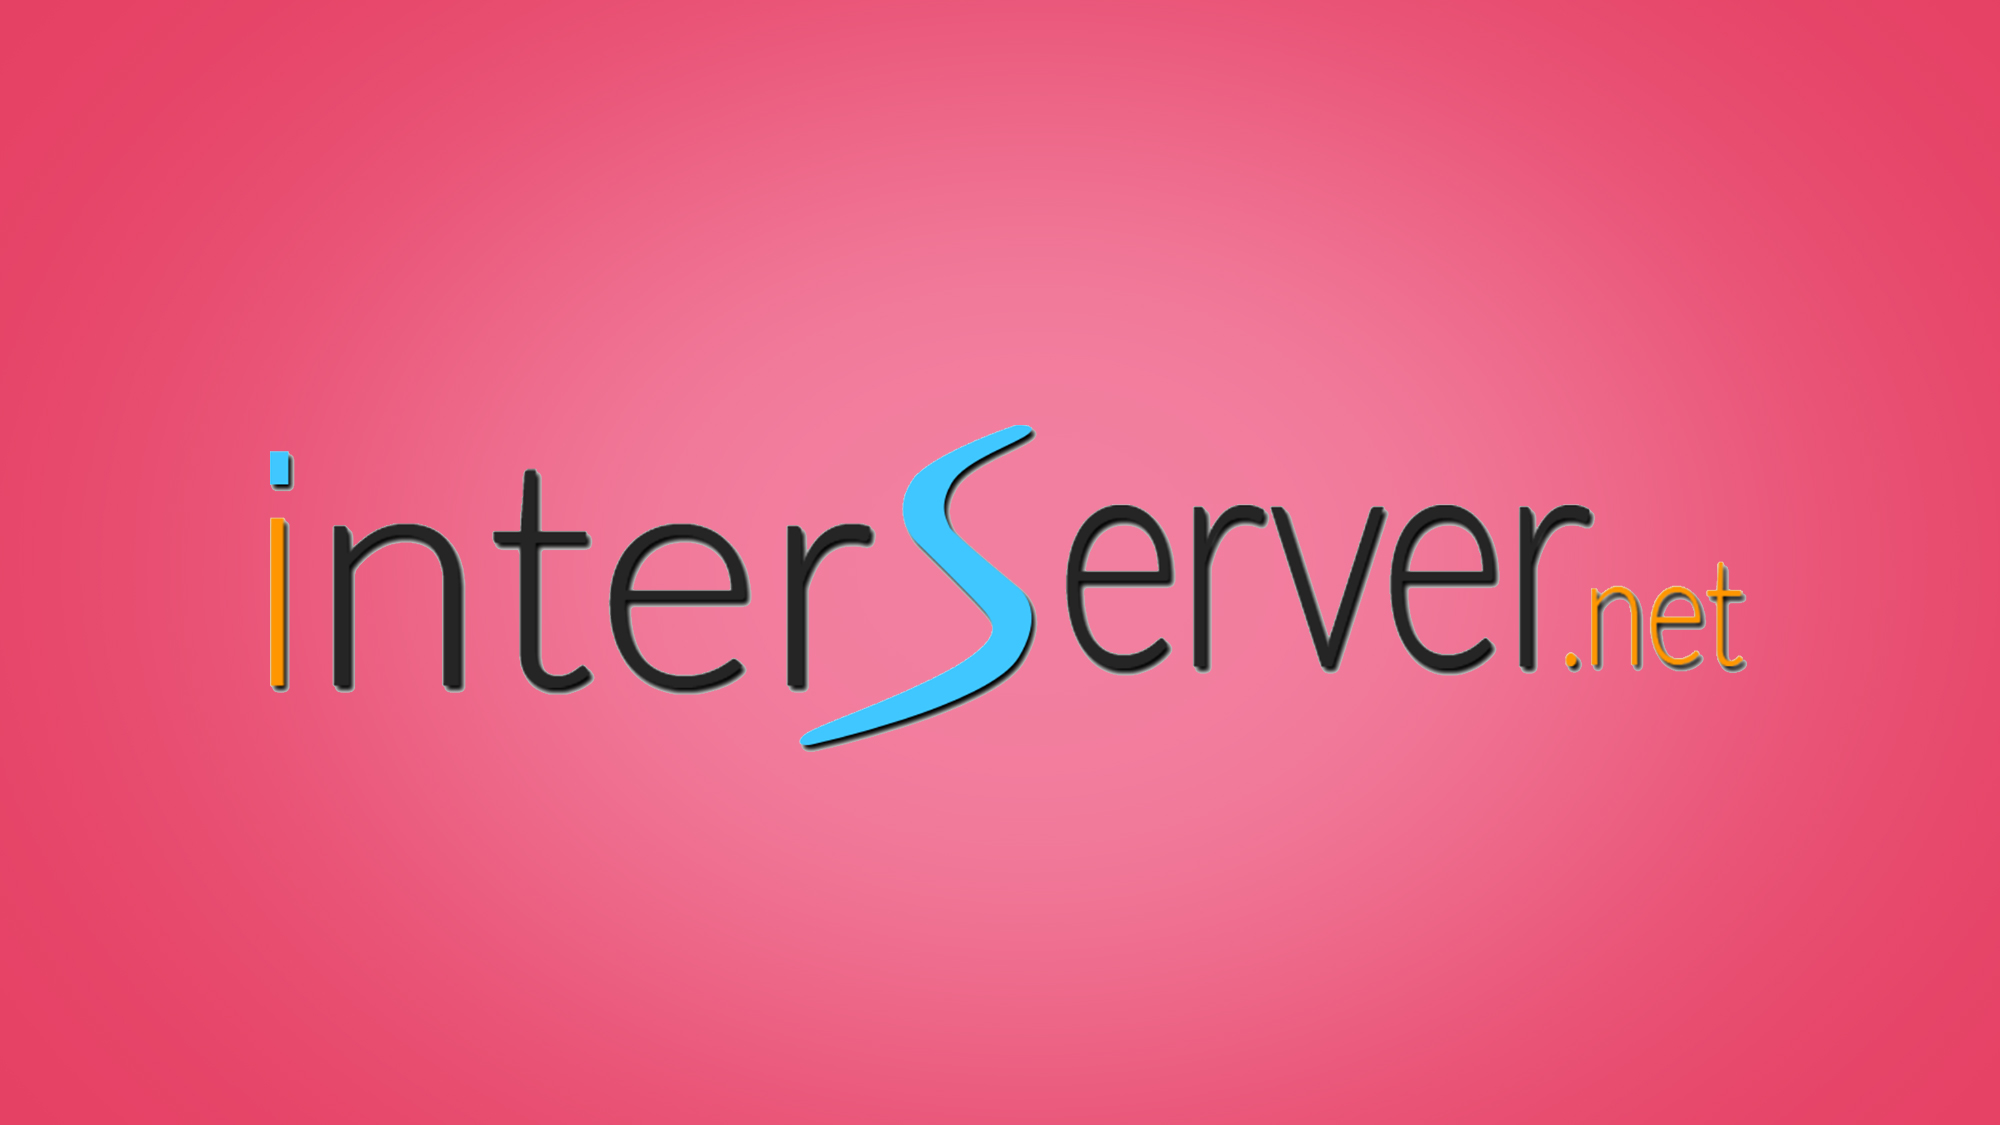 InterServer logo on pink background